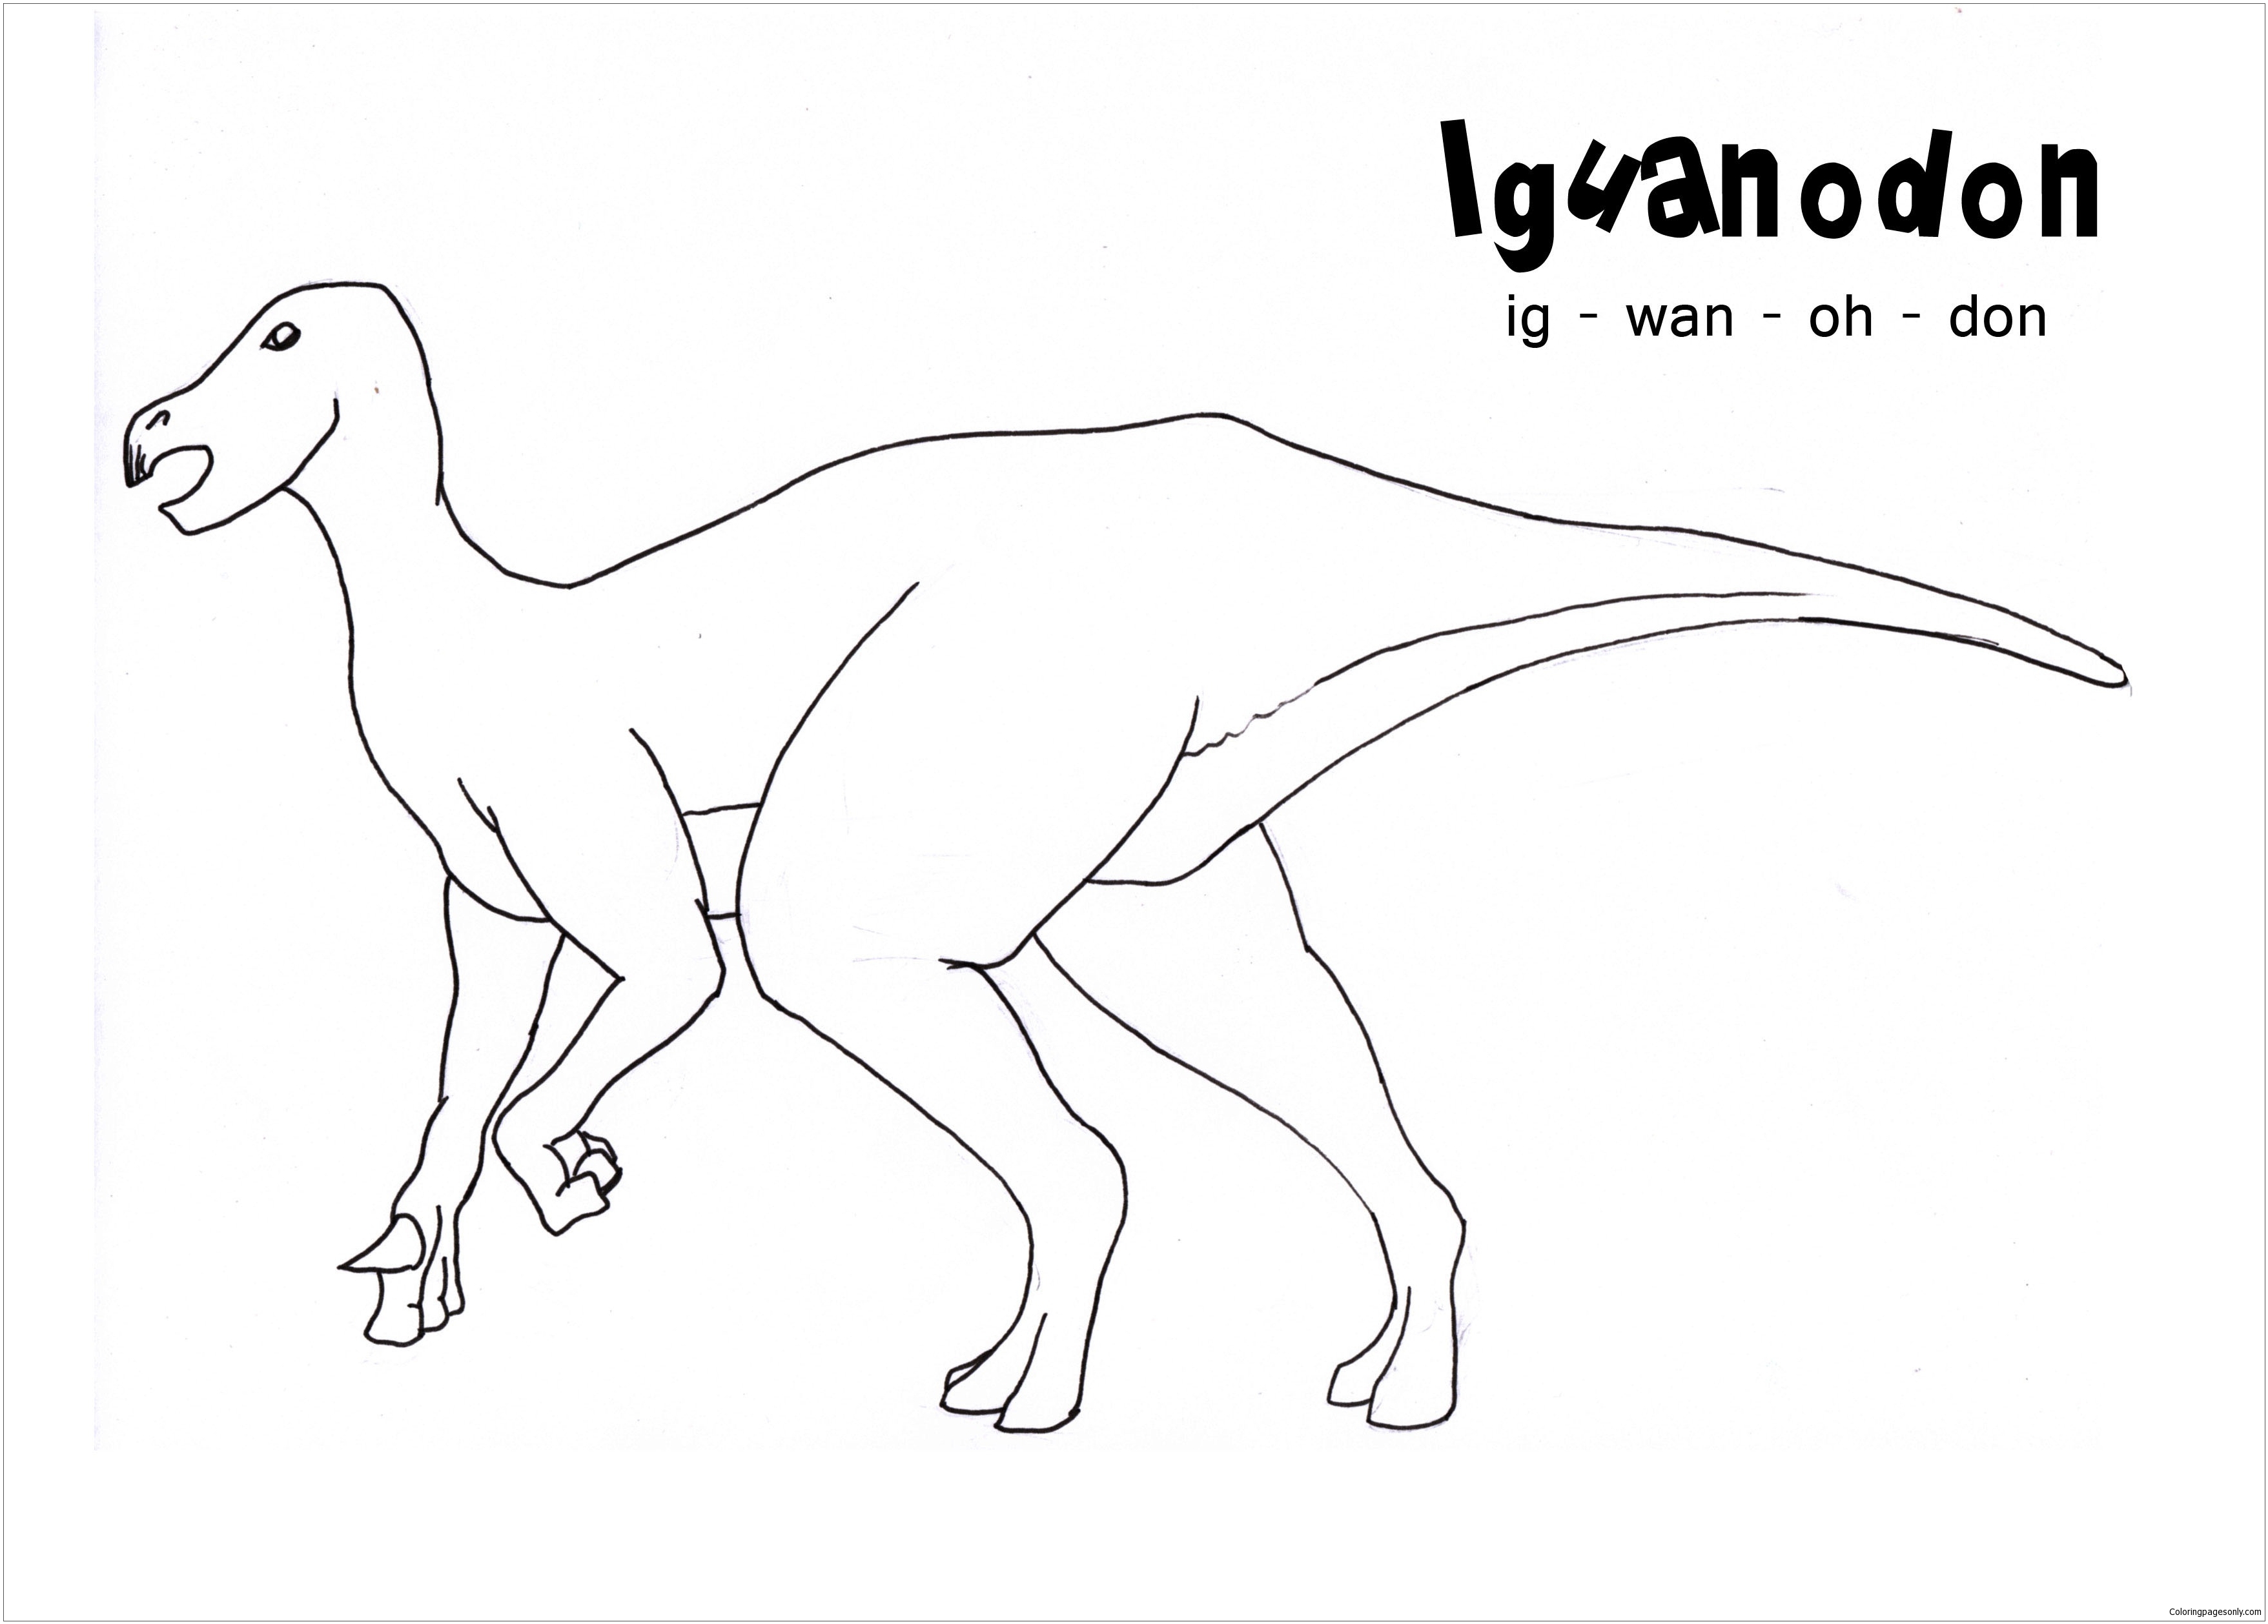 Iguanodonte da Iguanodonte